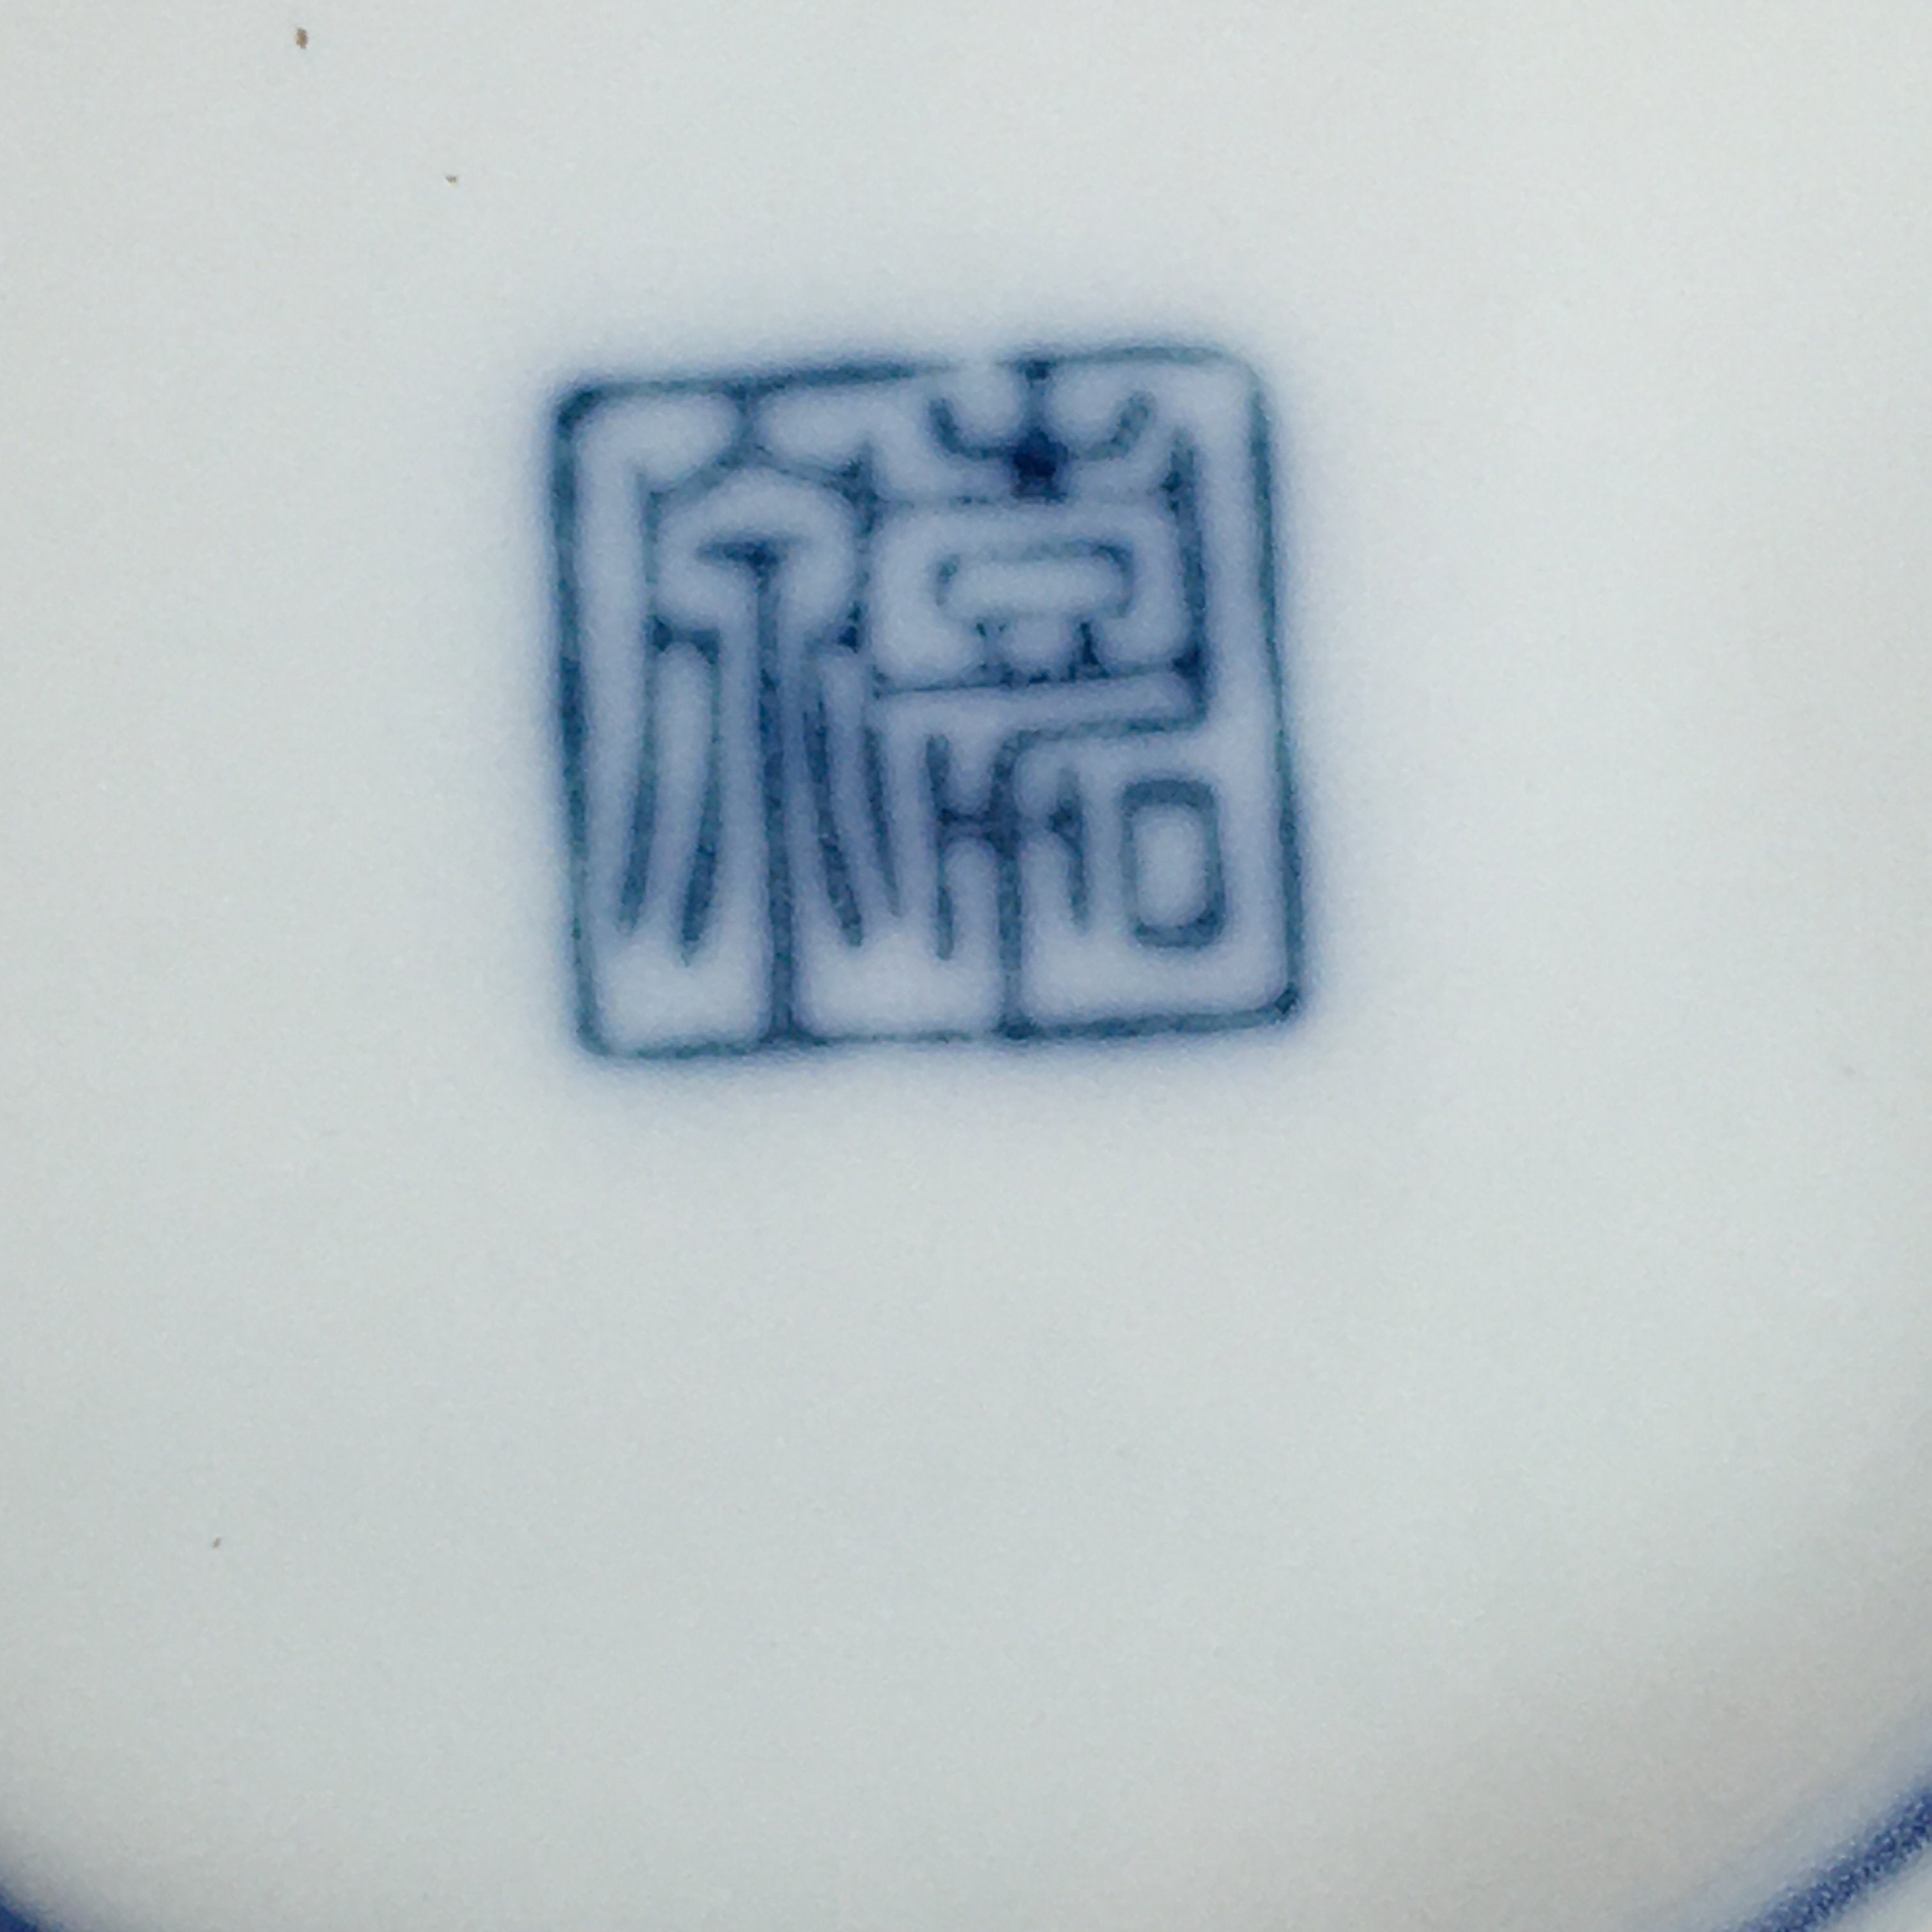 Japanese Porcelain Small Plate Kozara Vtg Round Pottery Blue Cloud Crane PP636